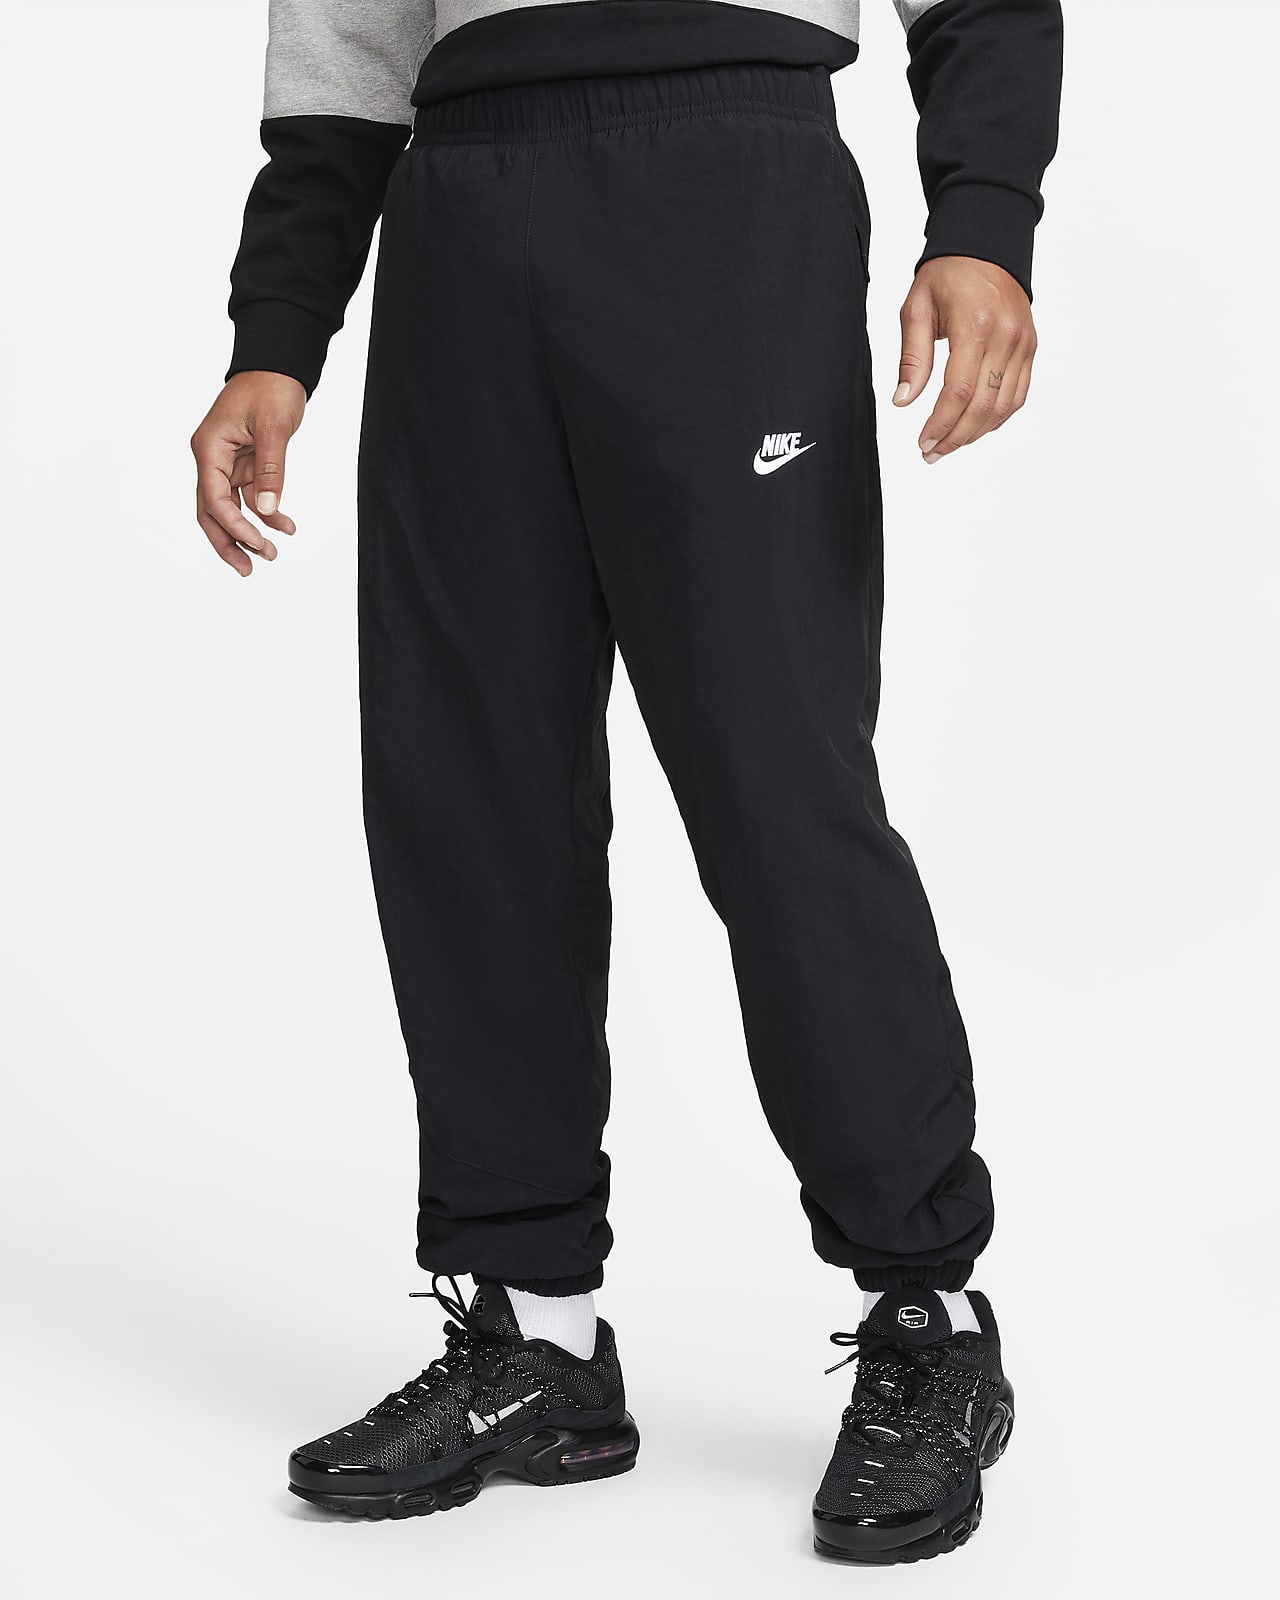 Nike Windrunner Pantalons de teixit Woven per a l'hivern - Home